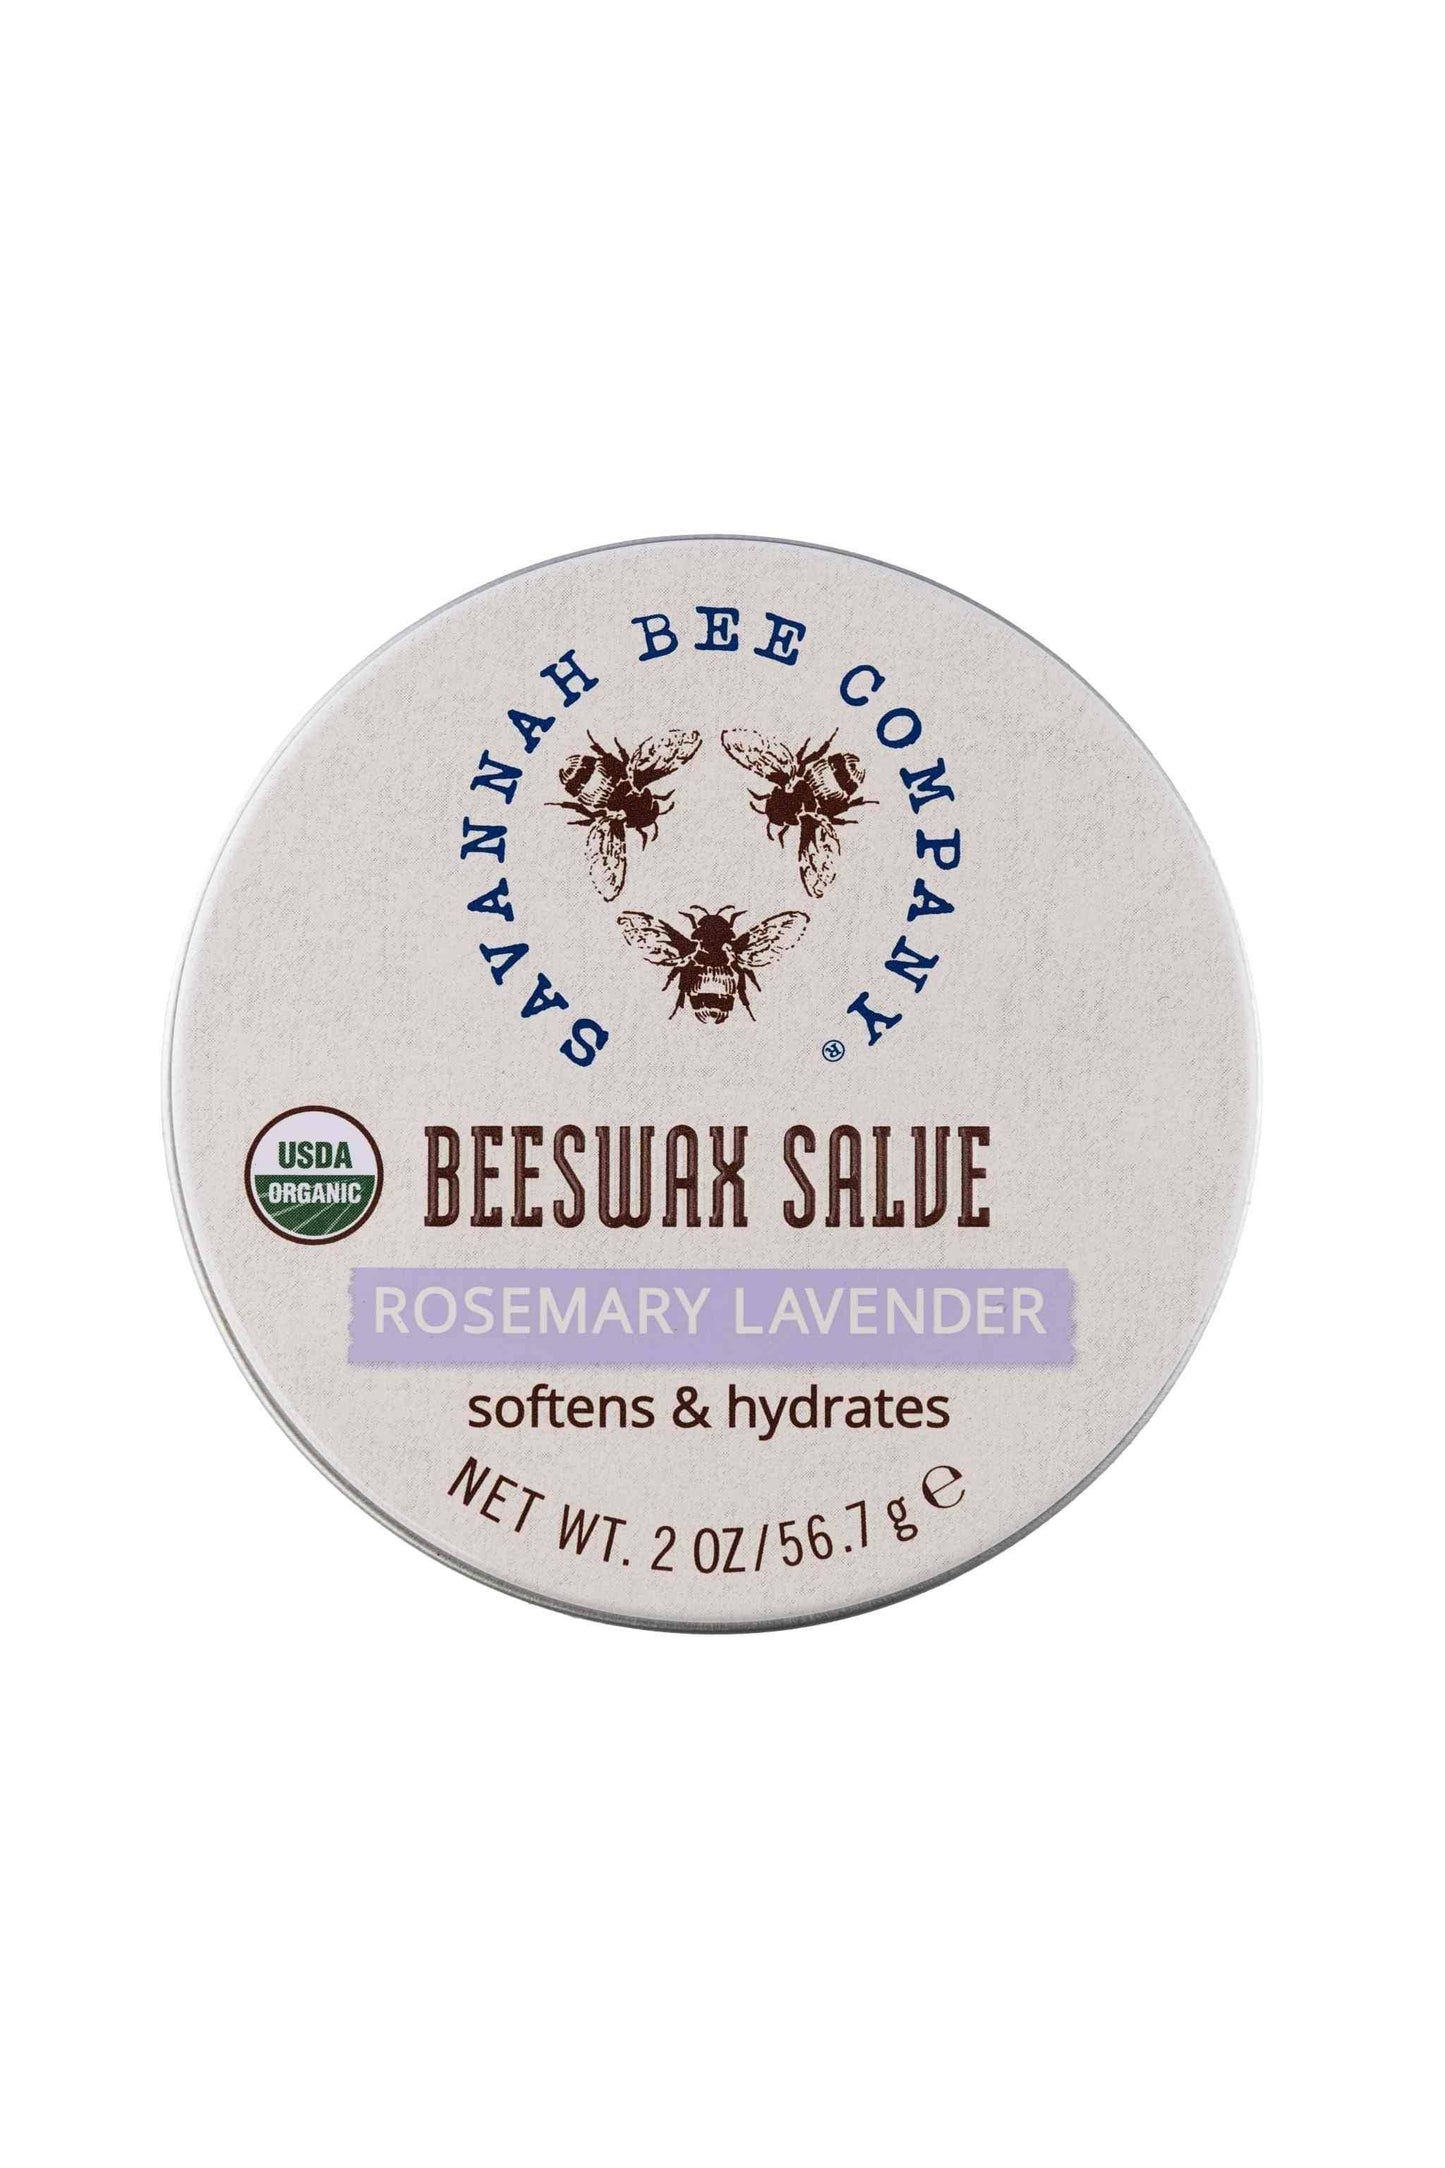 Beeswax Salve - Rosemary Lavender: 2 oz.